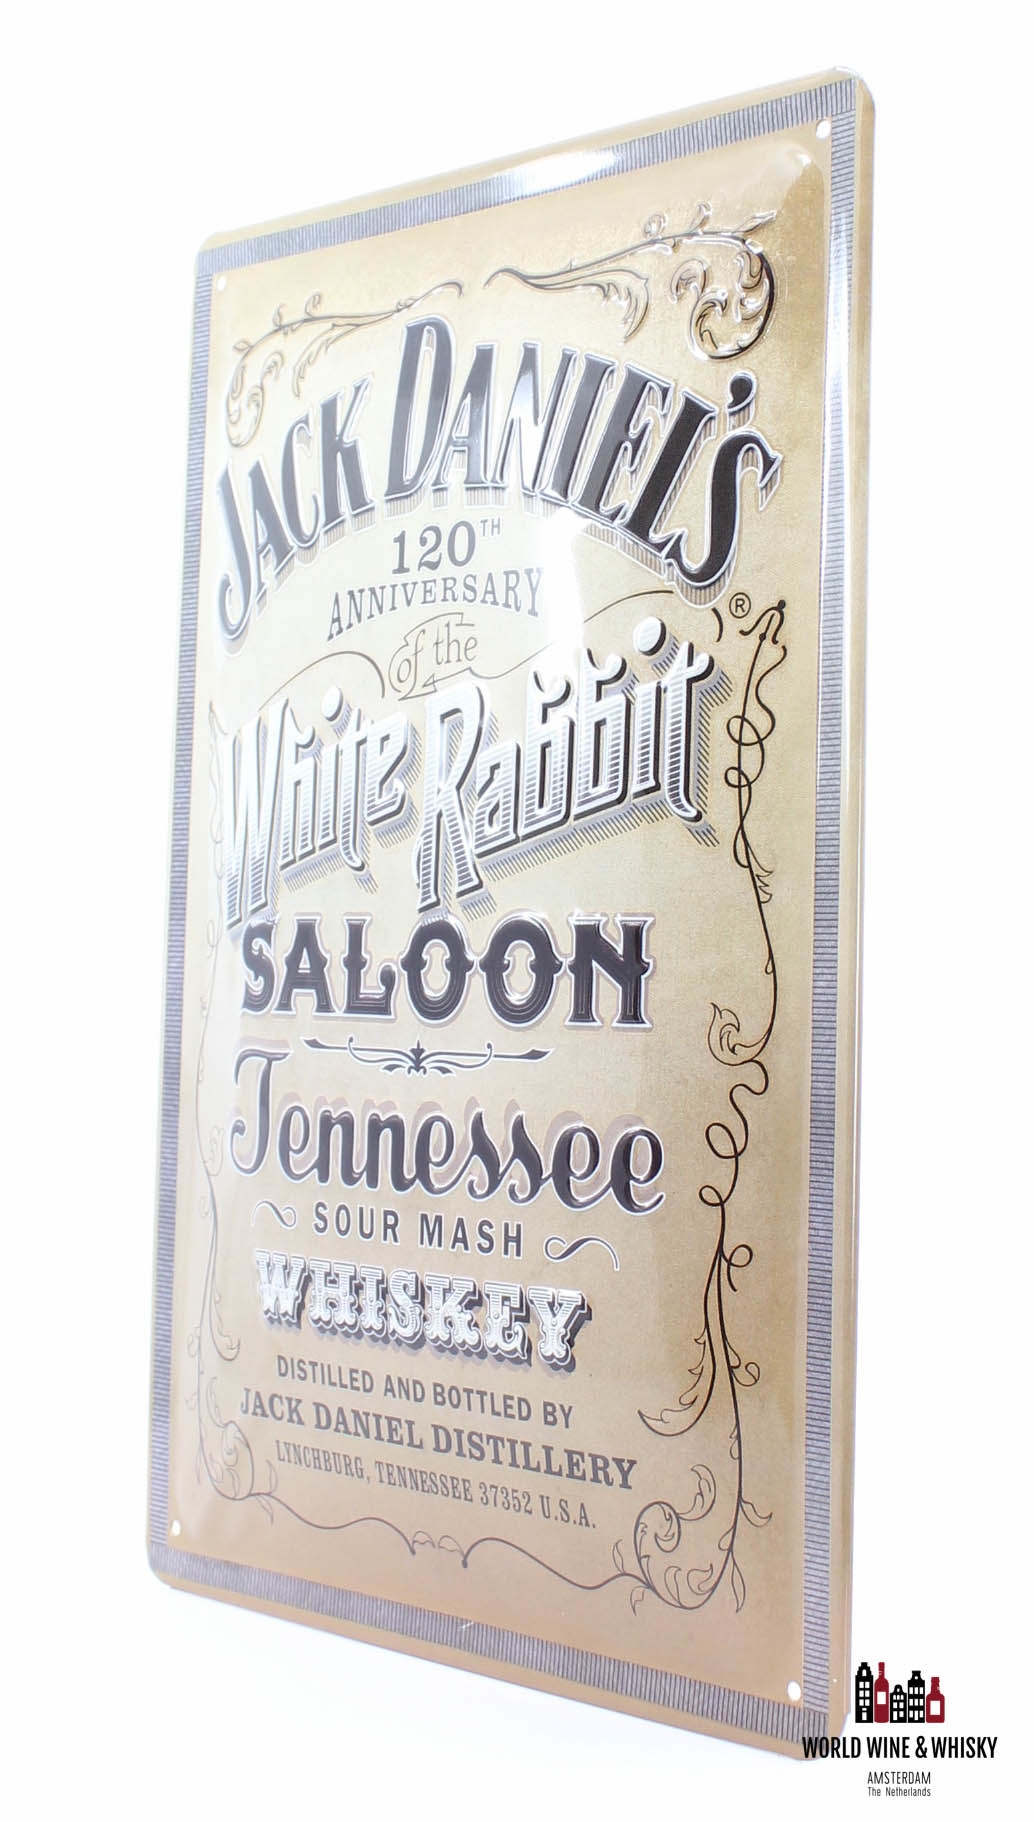 Jack Daniel's Iron Jack Daniel's Billboard Plate Sign - 120th Anniversary - White Rabbit Saloon